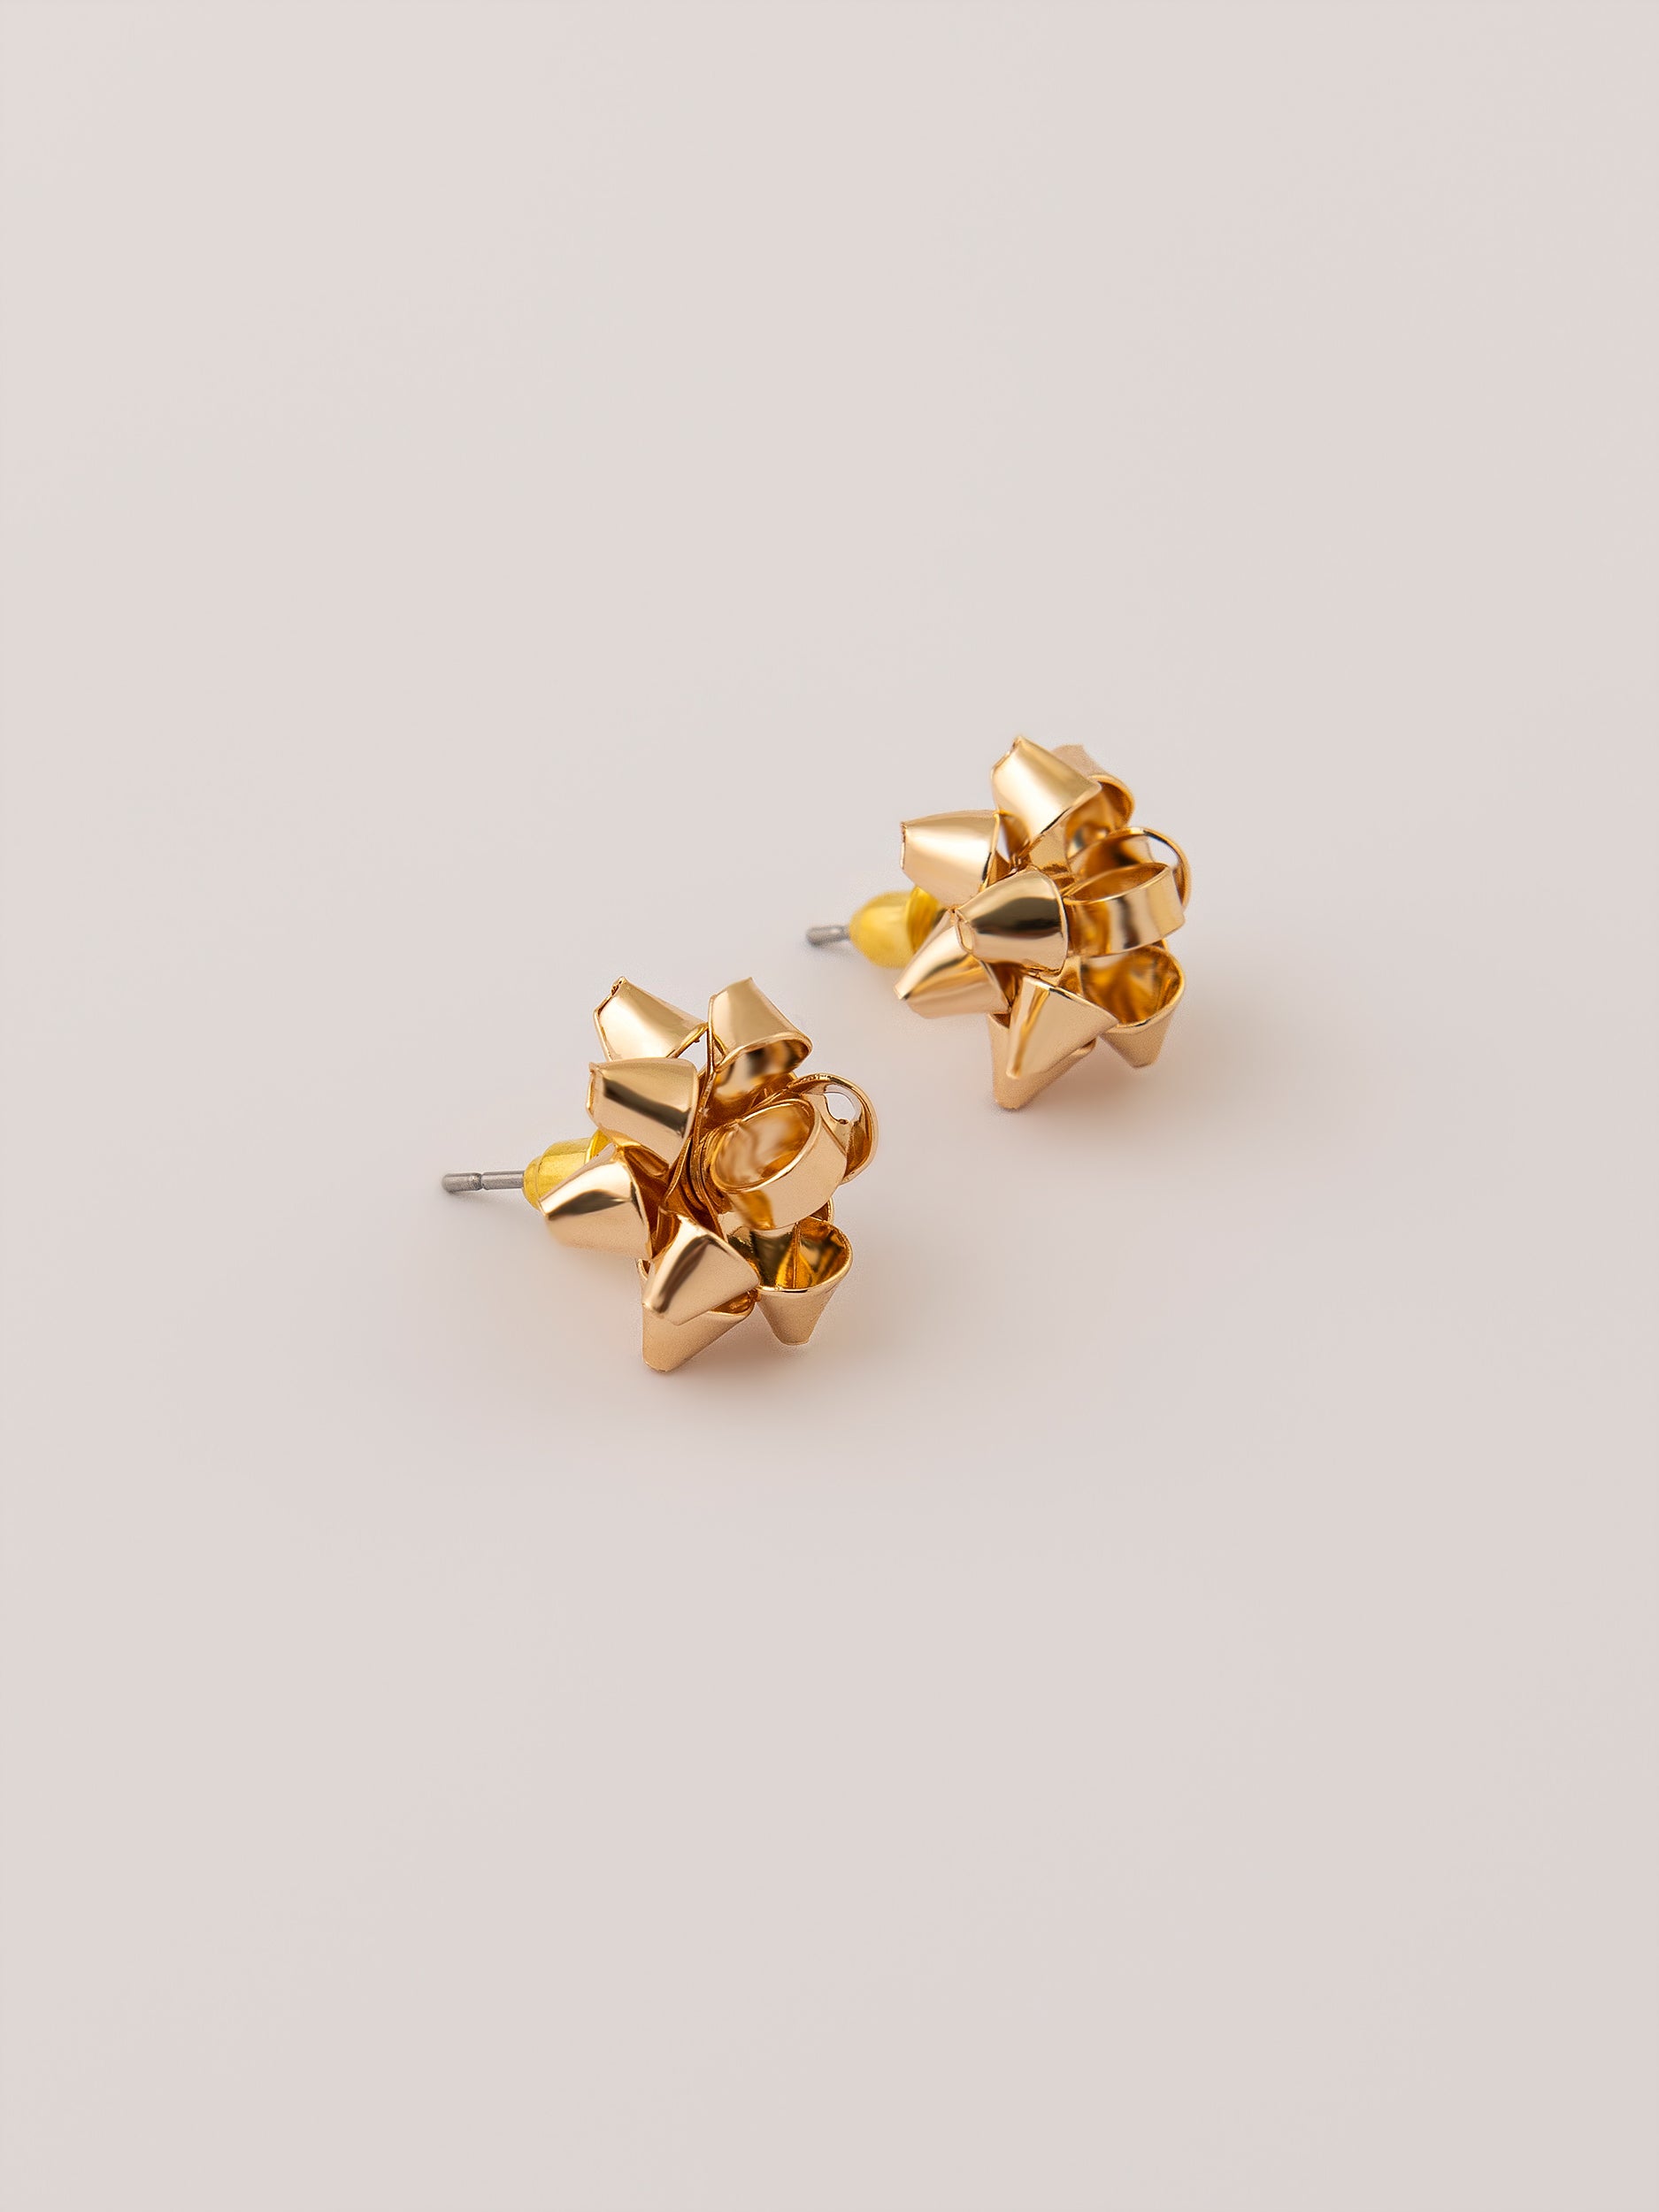 vintage-gold-earrings-set